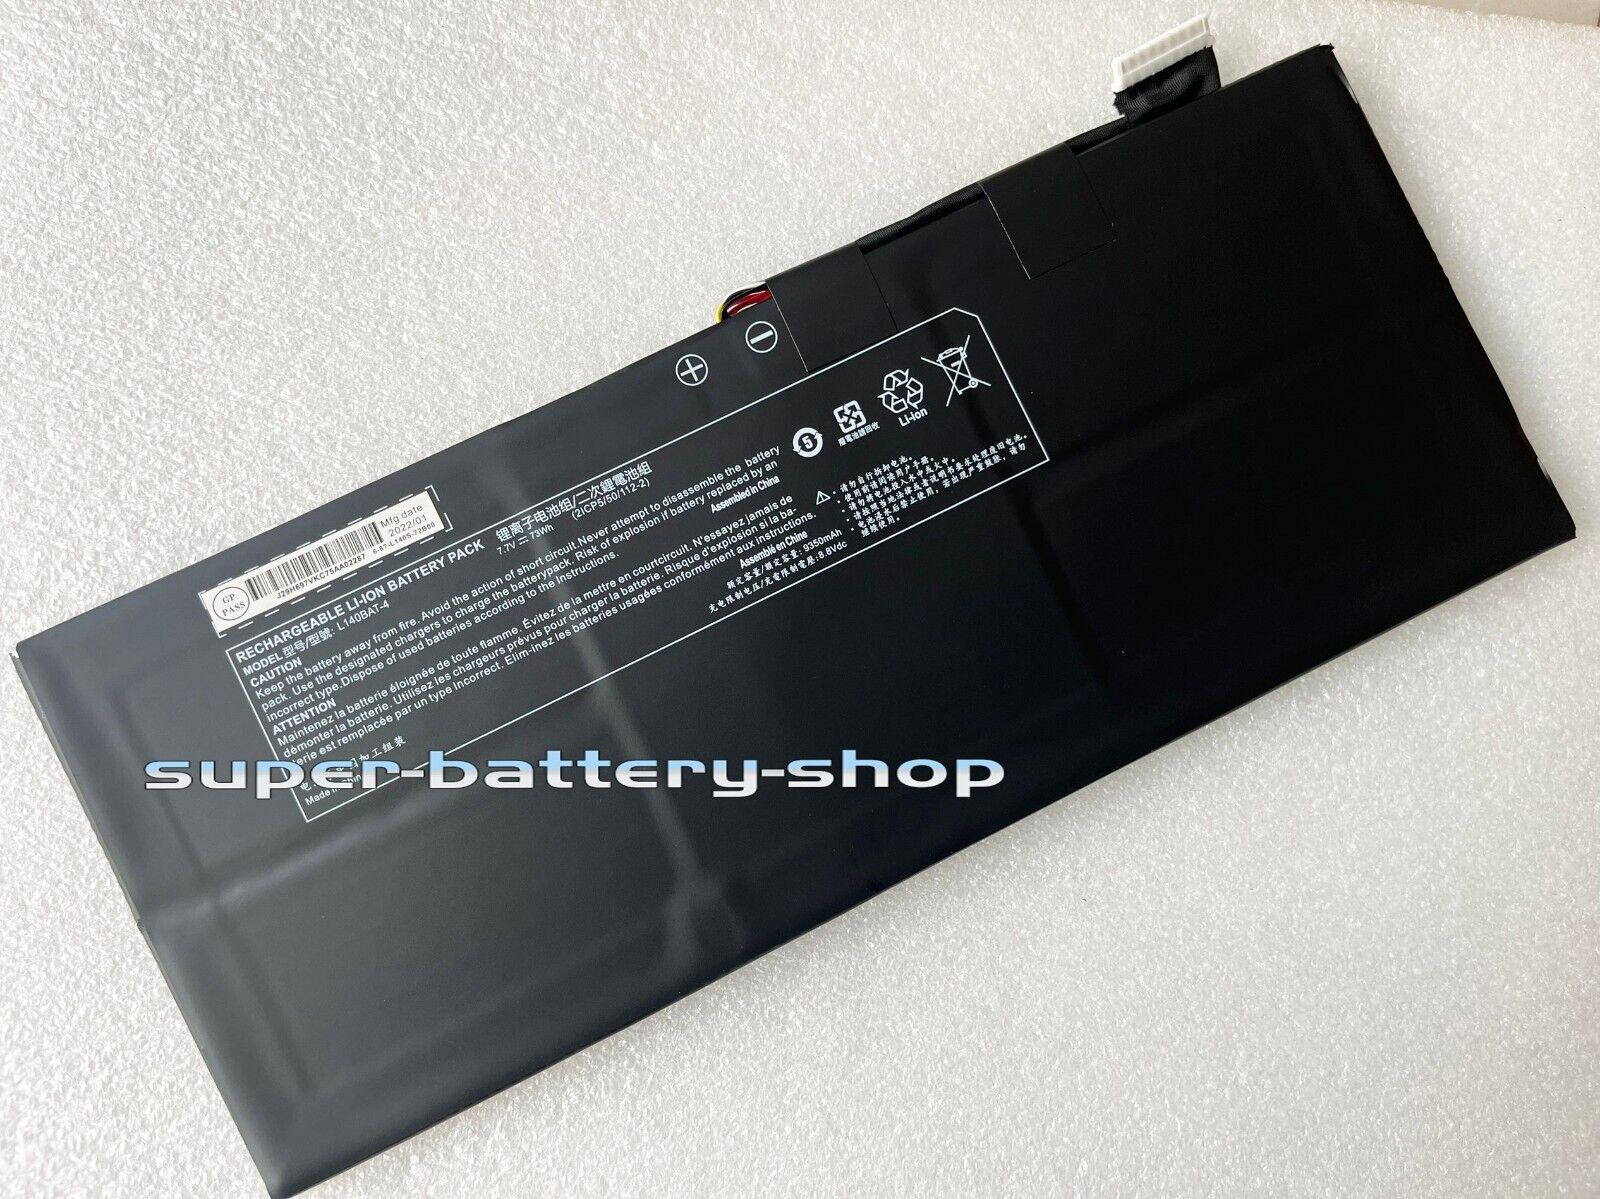 USA New Genuine L140BAT-4 battery for Lemp9 System76 Darter Pro 2021